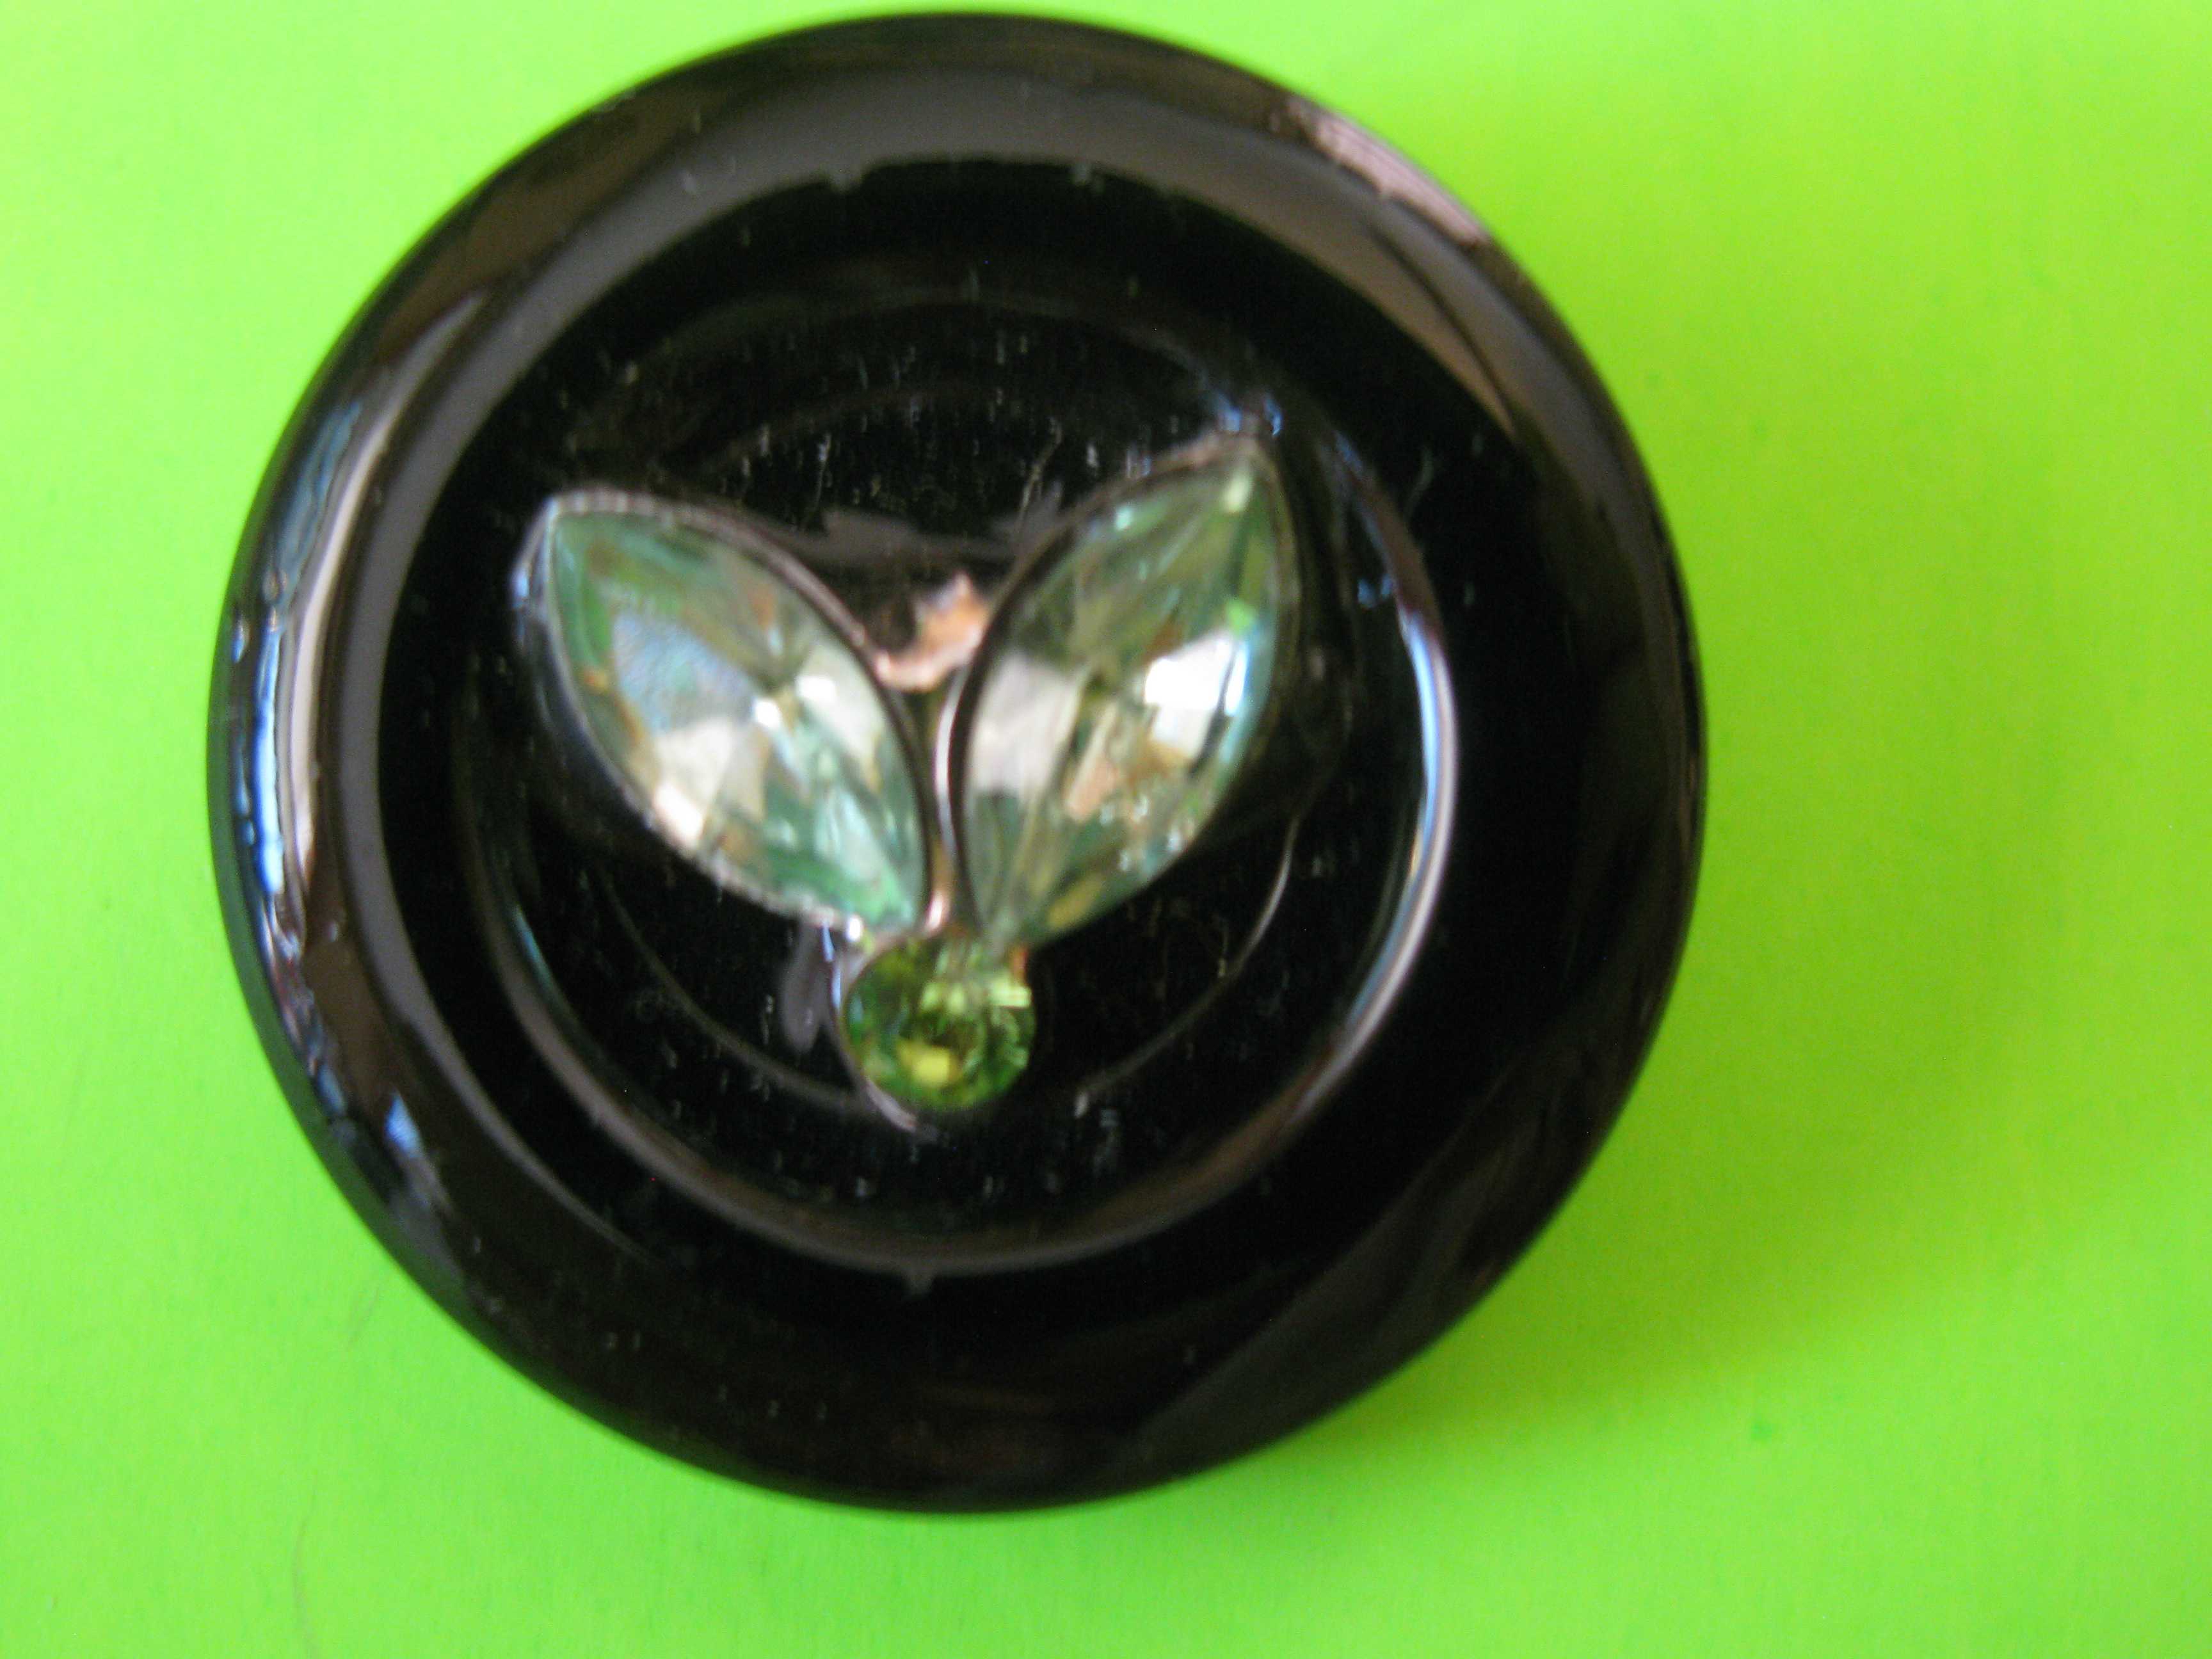 Tear Shaped Green Rhinestones and a Central Circular Rhinestone on Hard Plastic Button